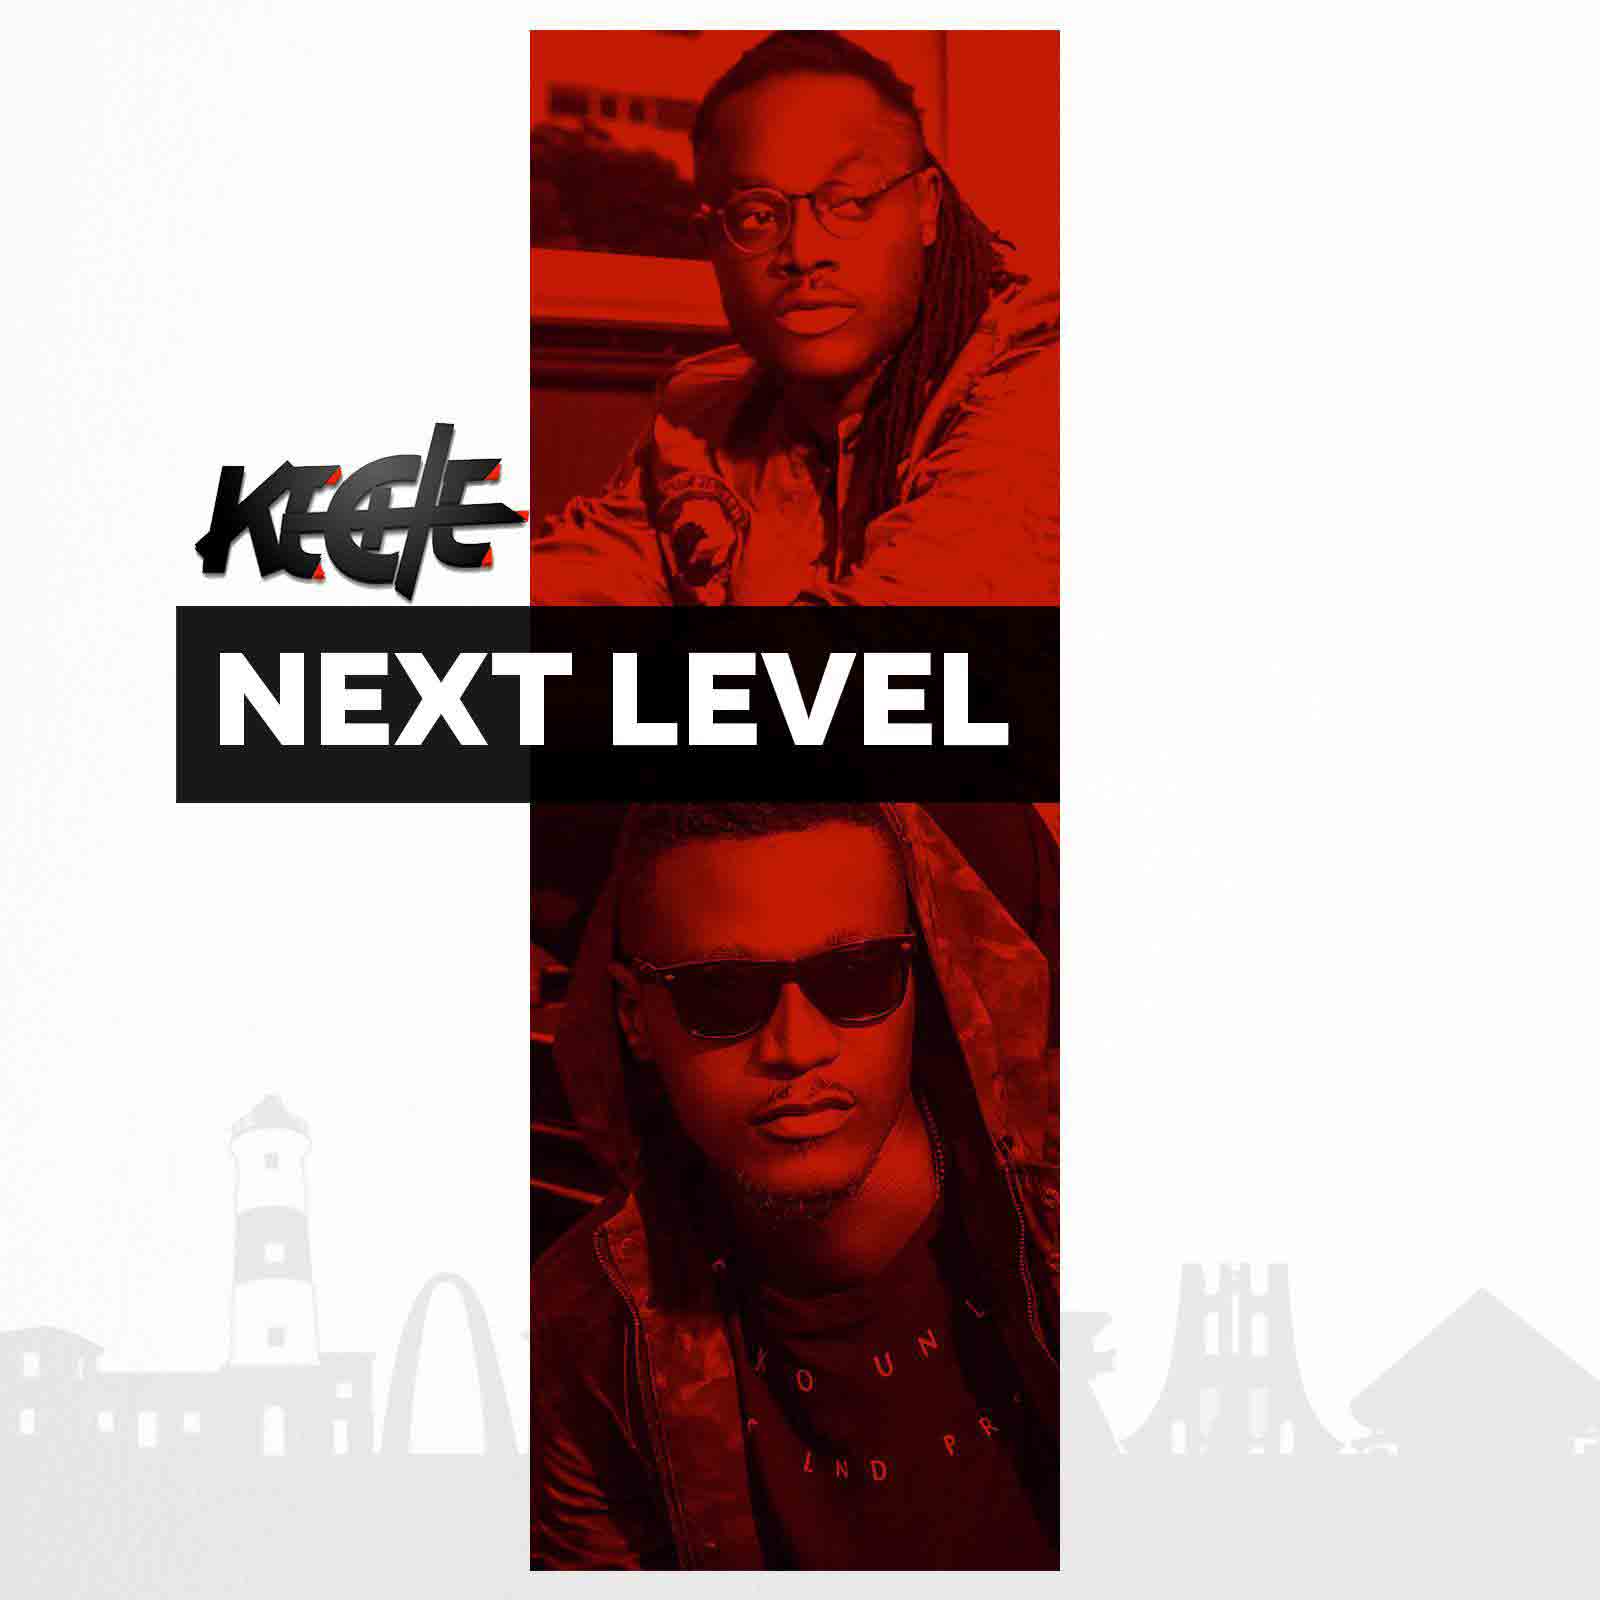 Next Level by Keche